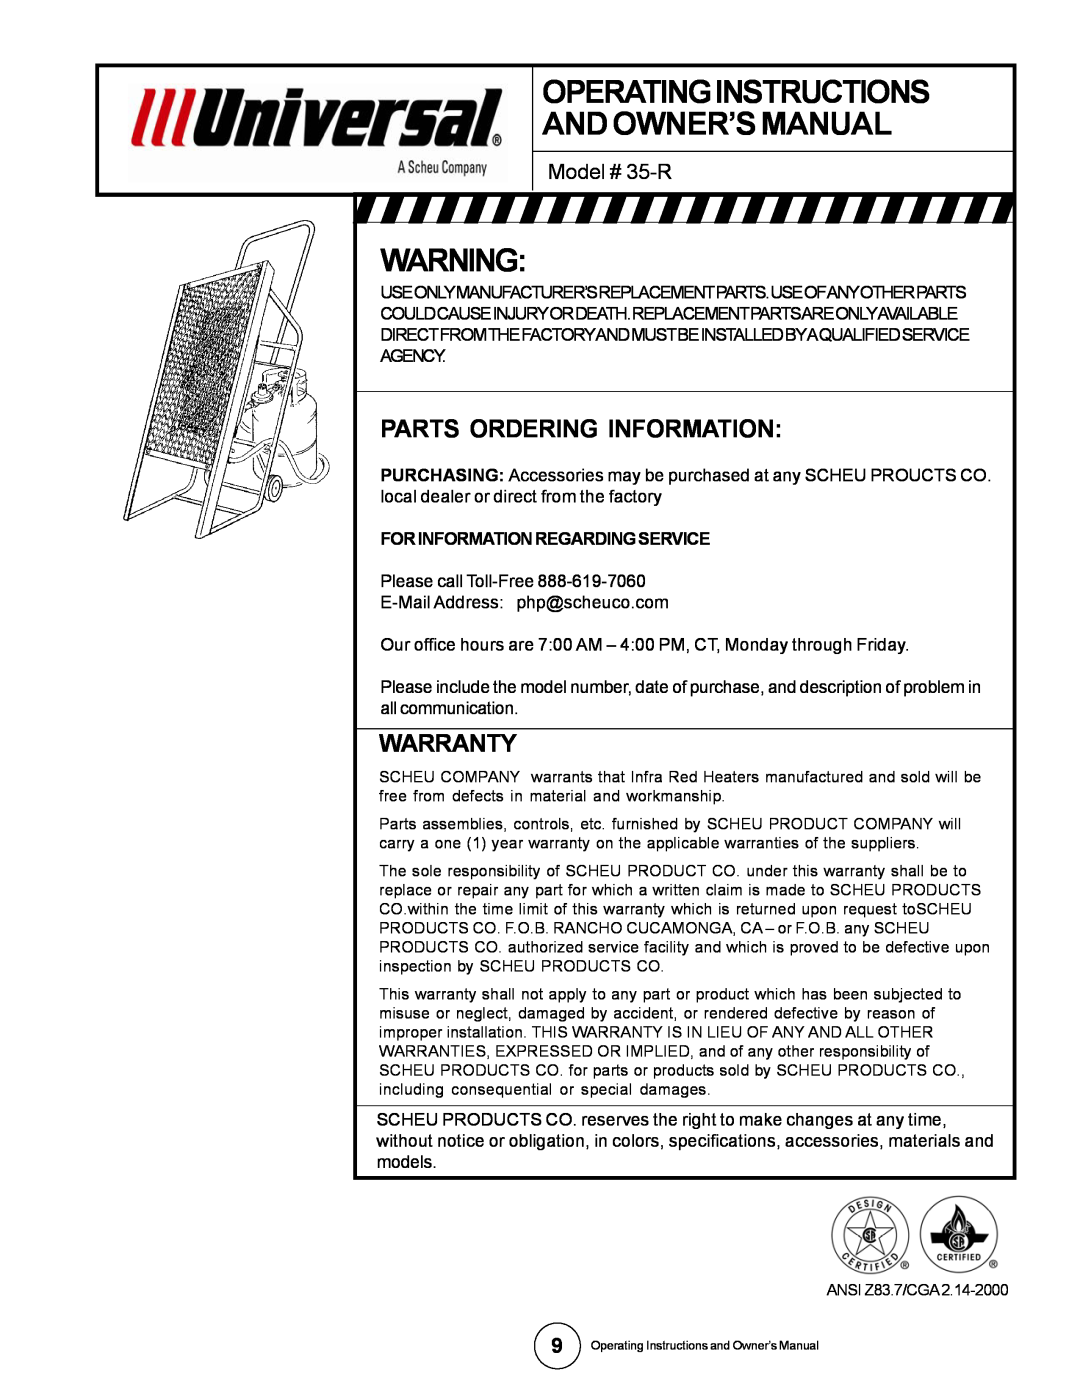 Universal owner manual Parts Ordering Information, Warranty, Model # 35-R, For Information Regarding Service 